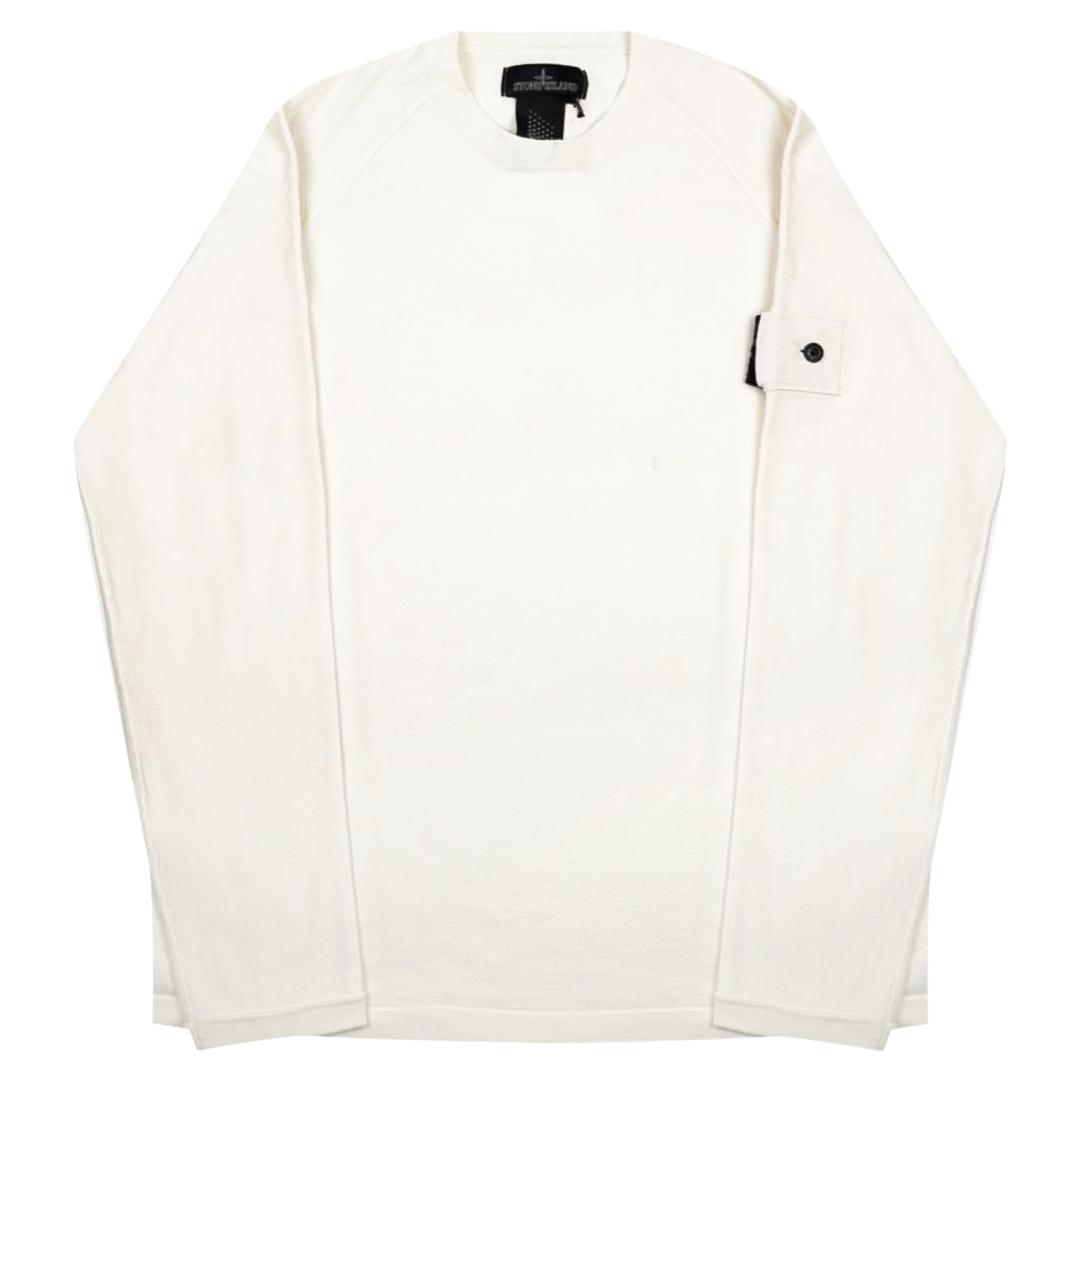 STONE ISLAND SHADOW PROJECT Белый хлопковый джемпер / свитер, фото 1